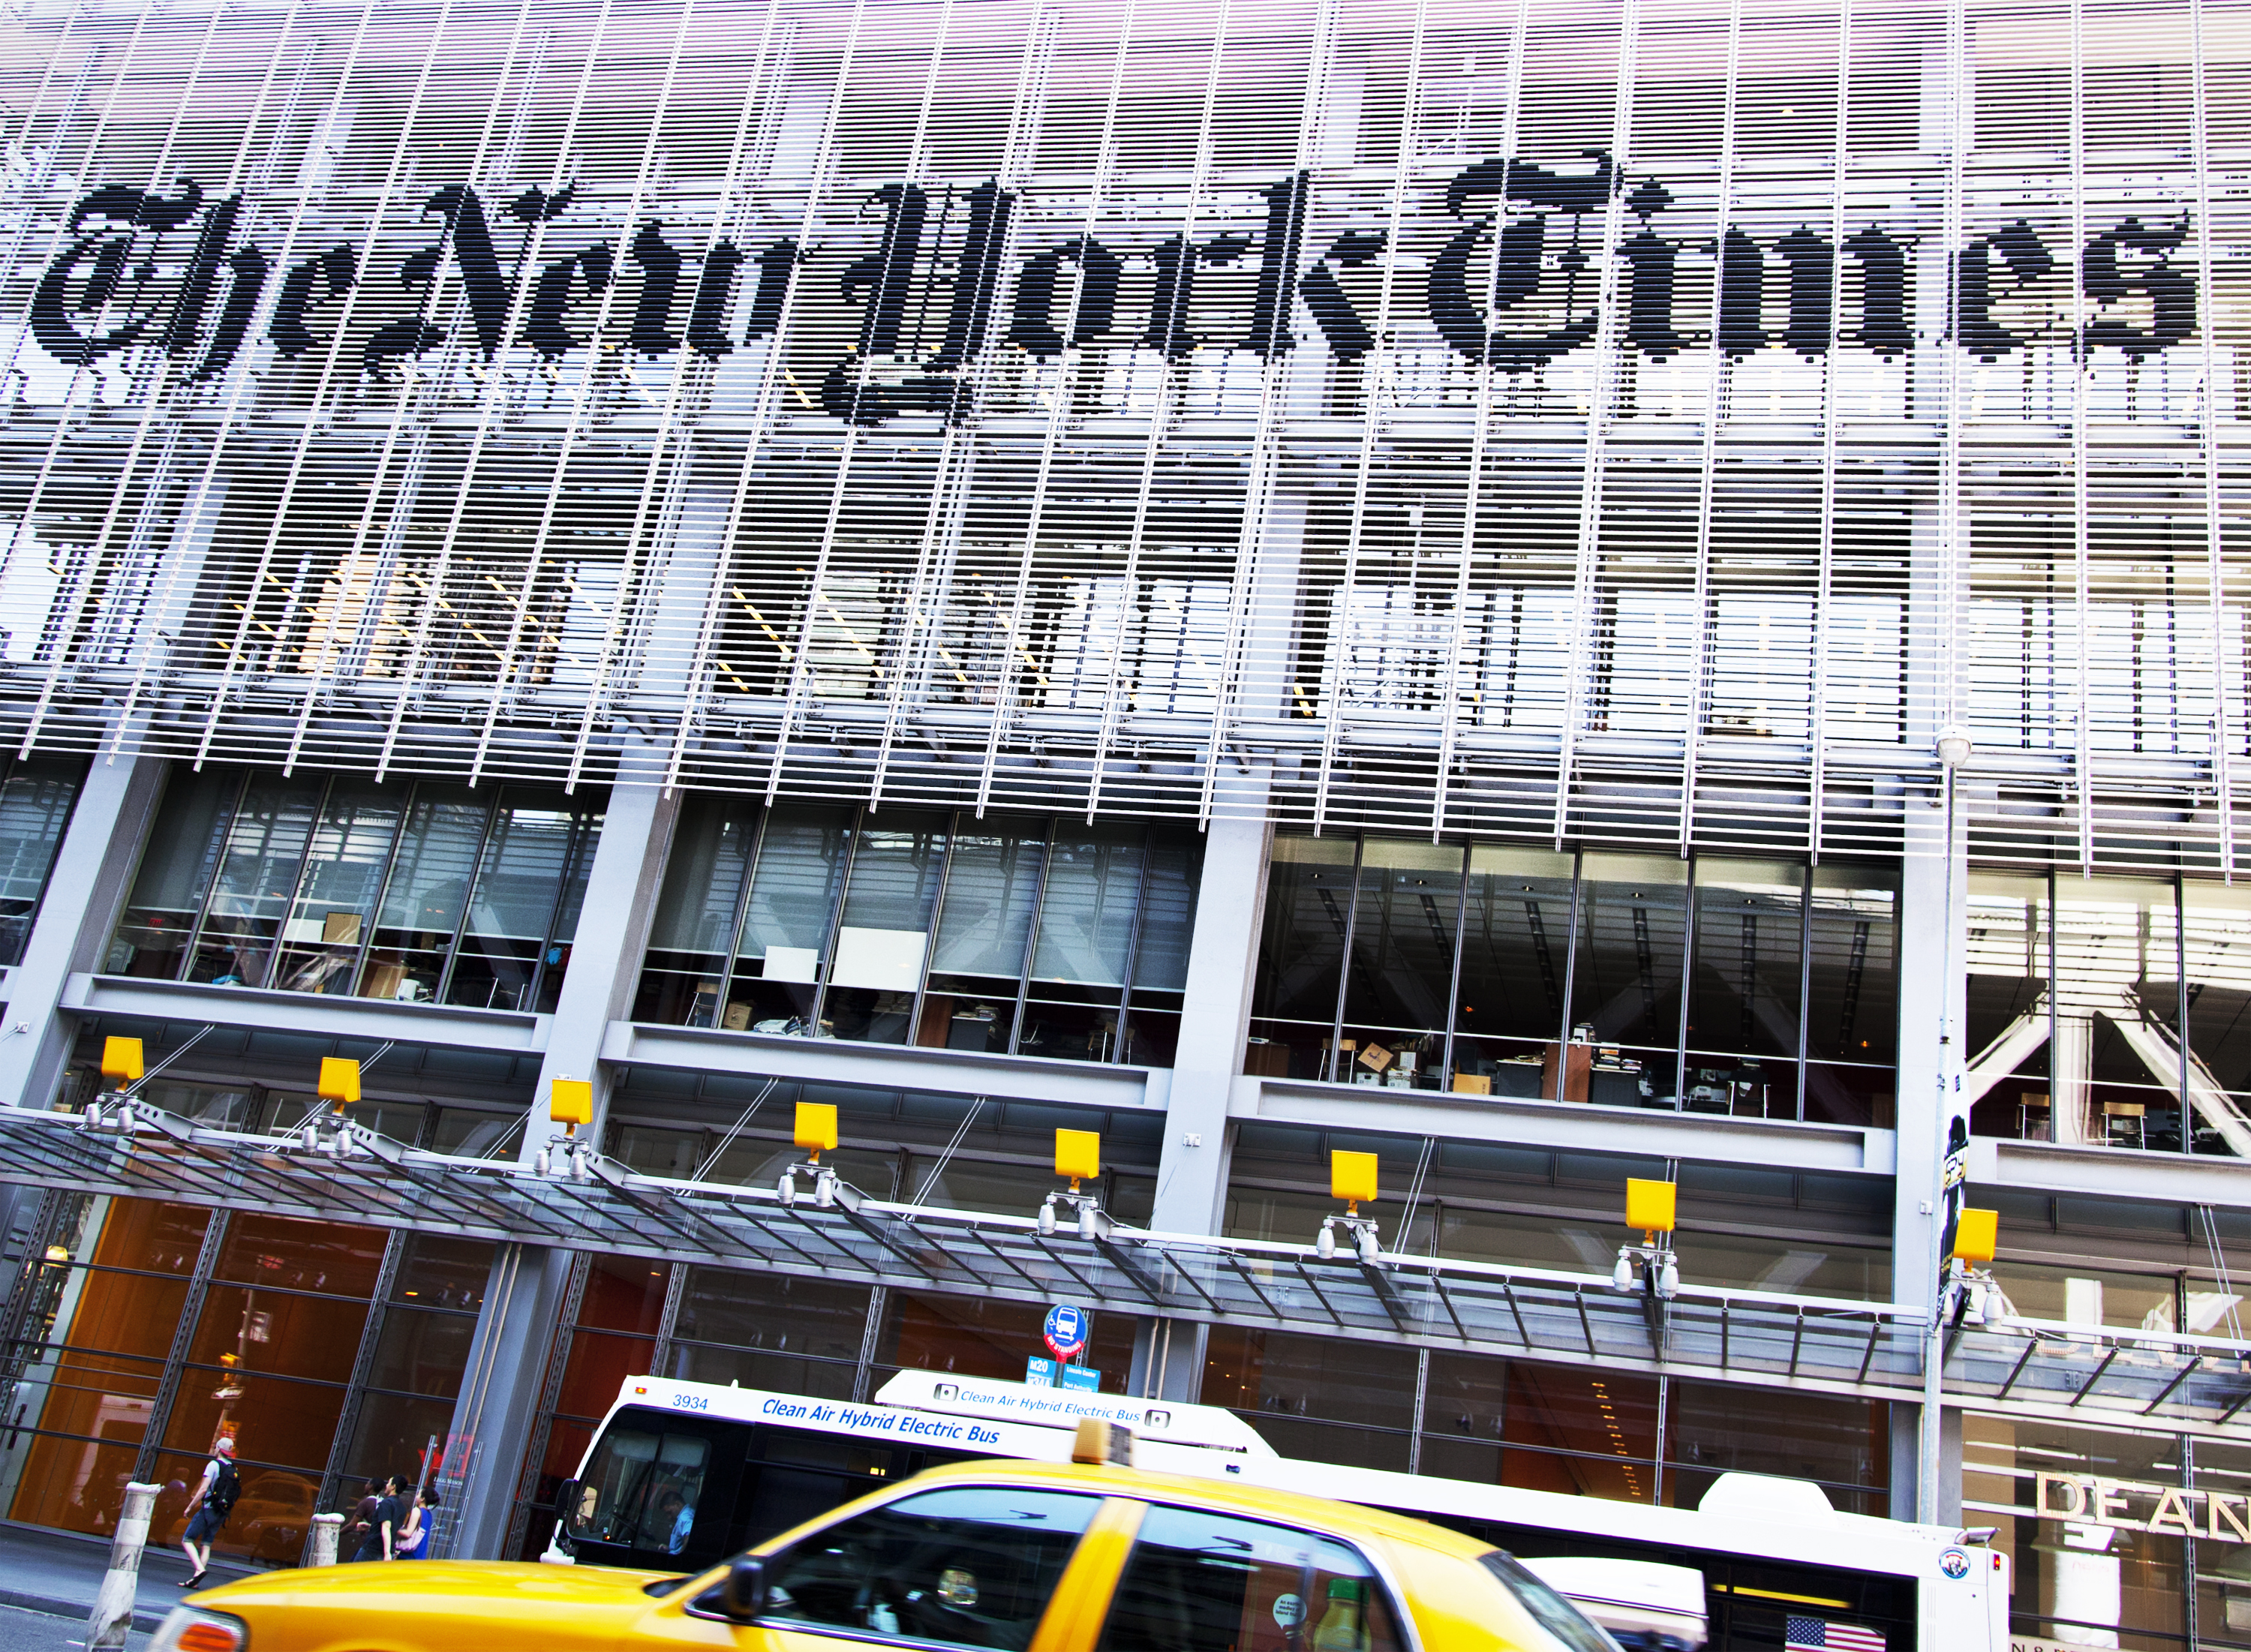 The New York Times building on June 3, 2012. (Erika Cross/Shutterstock)